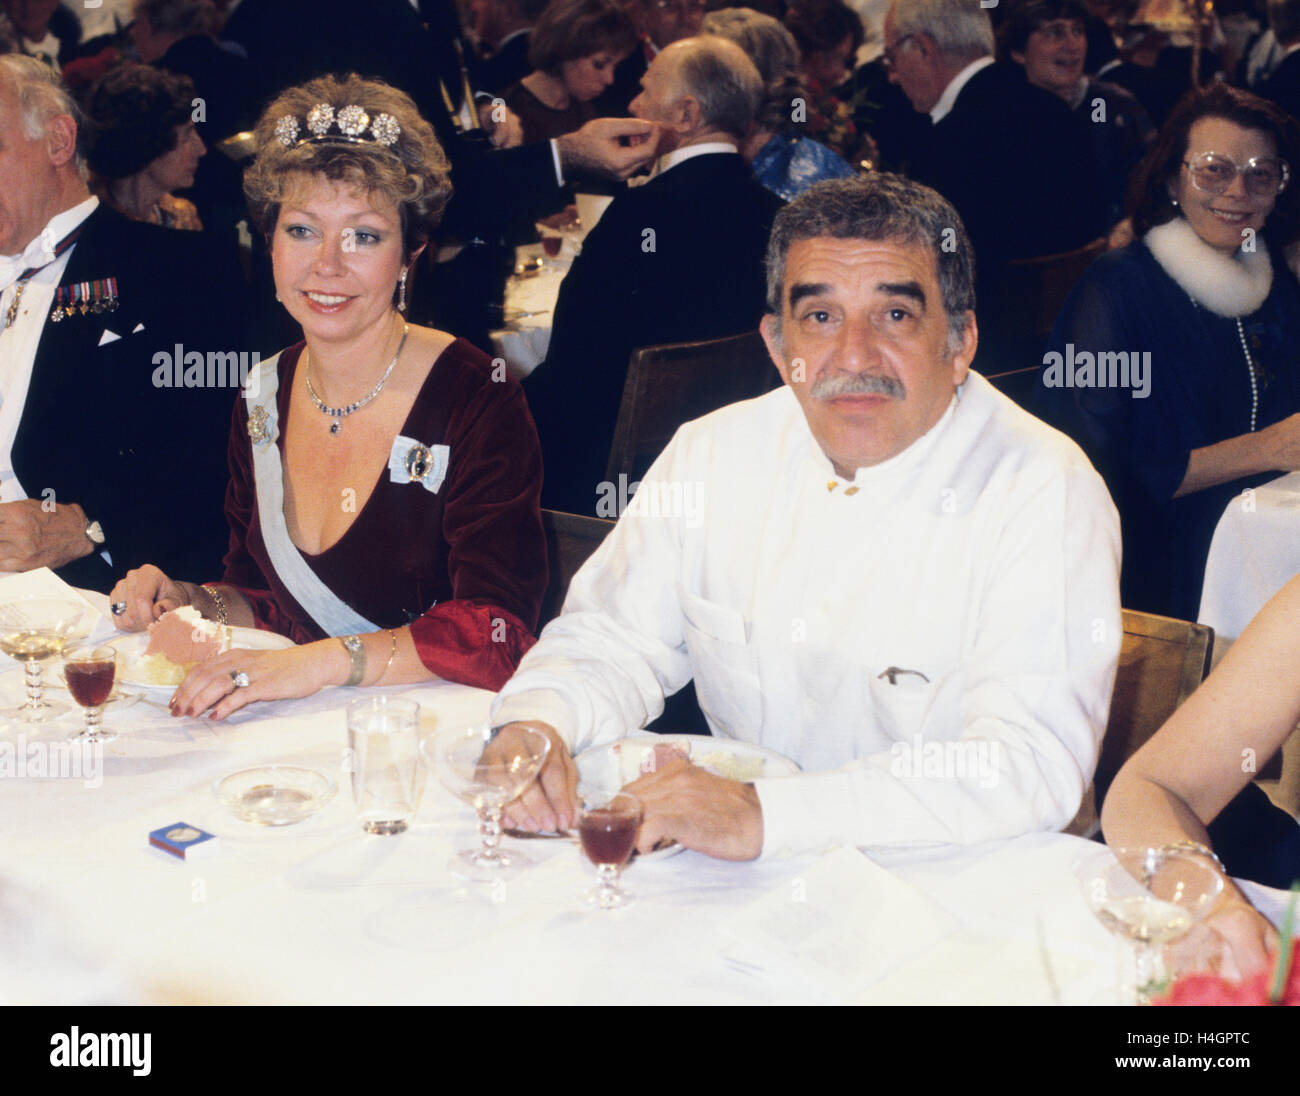 GABRIEL GARCIA MARQUEZ Author and Nobel laureate in literature at Nobel banquet  with dinner partner Princess Christina 1982 Stock Photo